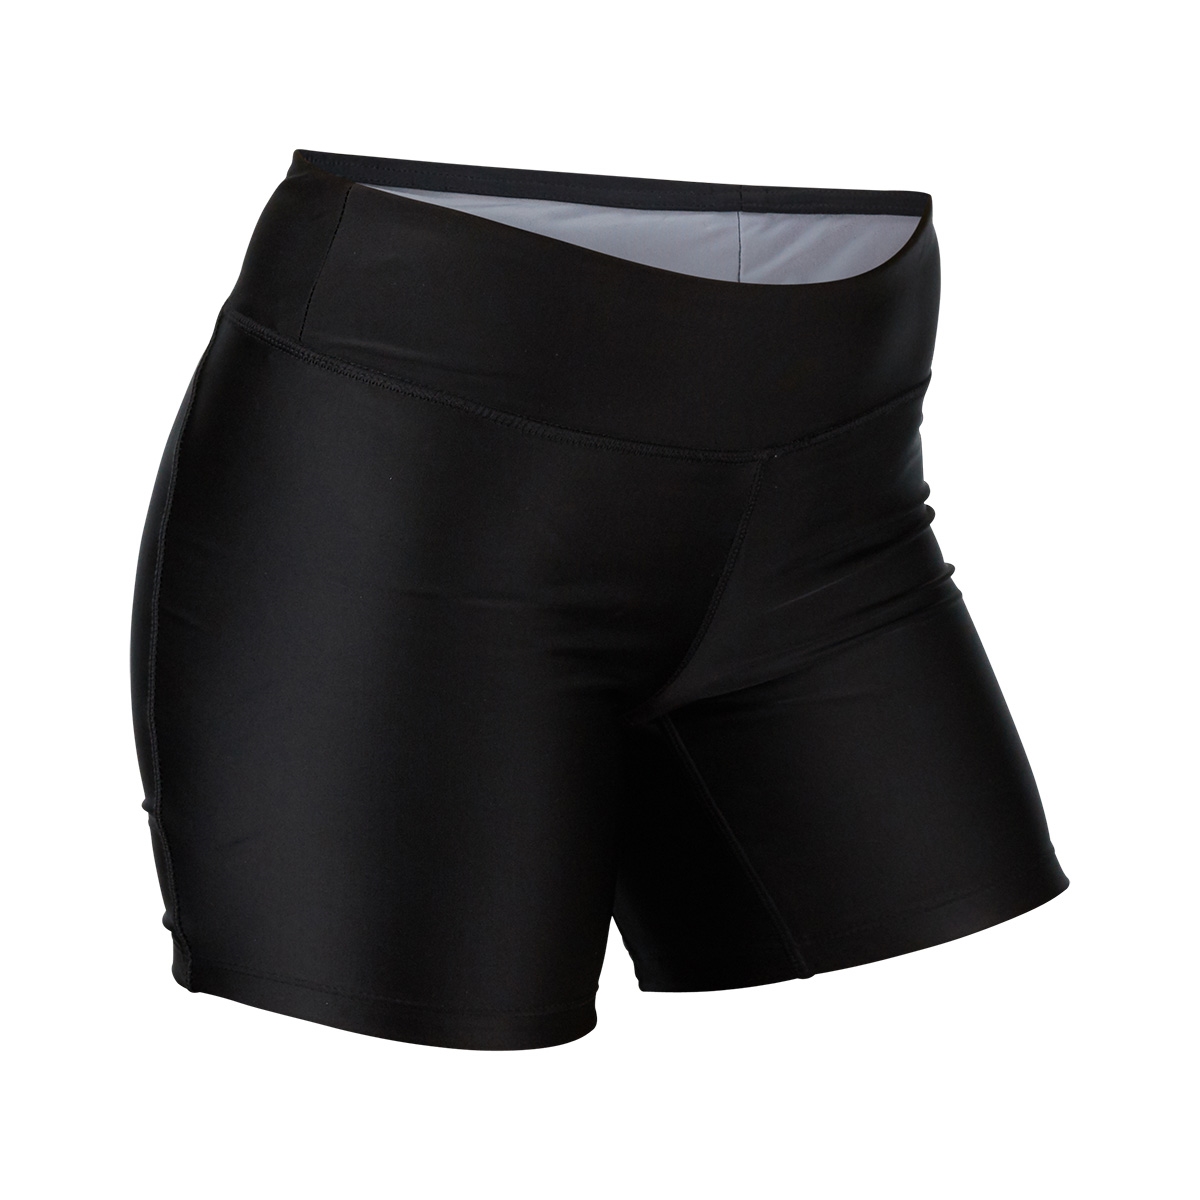 swimming shorts chlorine resistant summer swimwear for women - spf/upf 50+ moqjeap